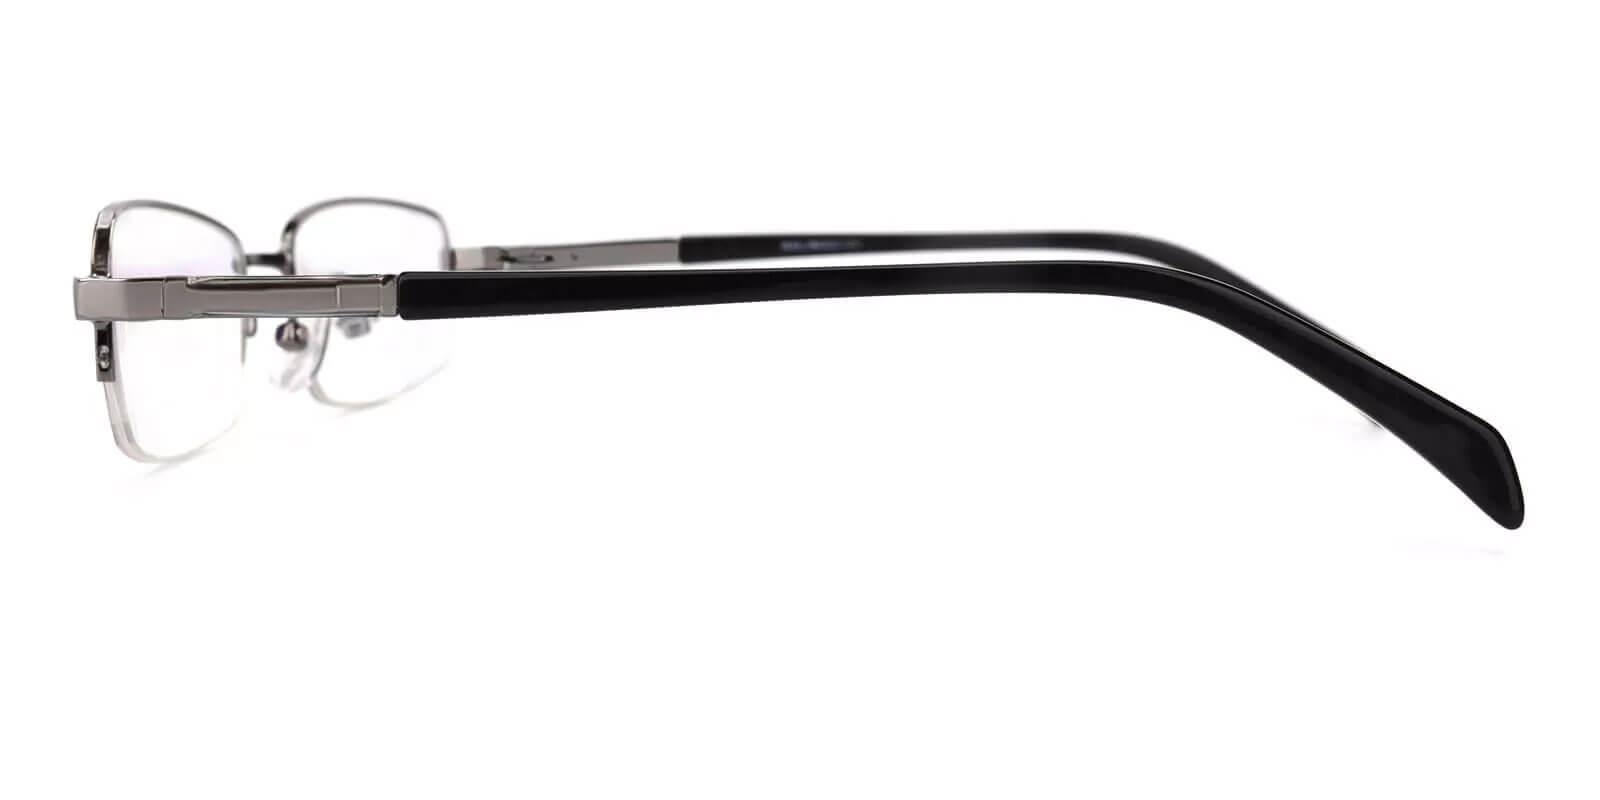 Michael Gun Metal SpringHinges , Eyeglasses , NosePads Frames from ABBE Glasses